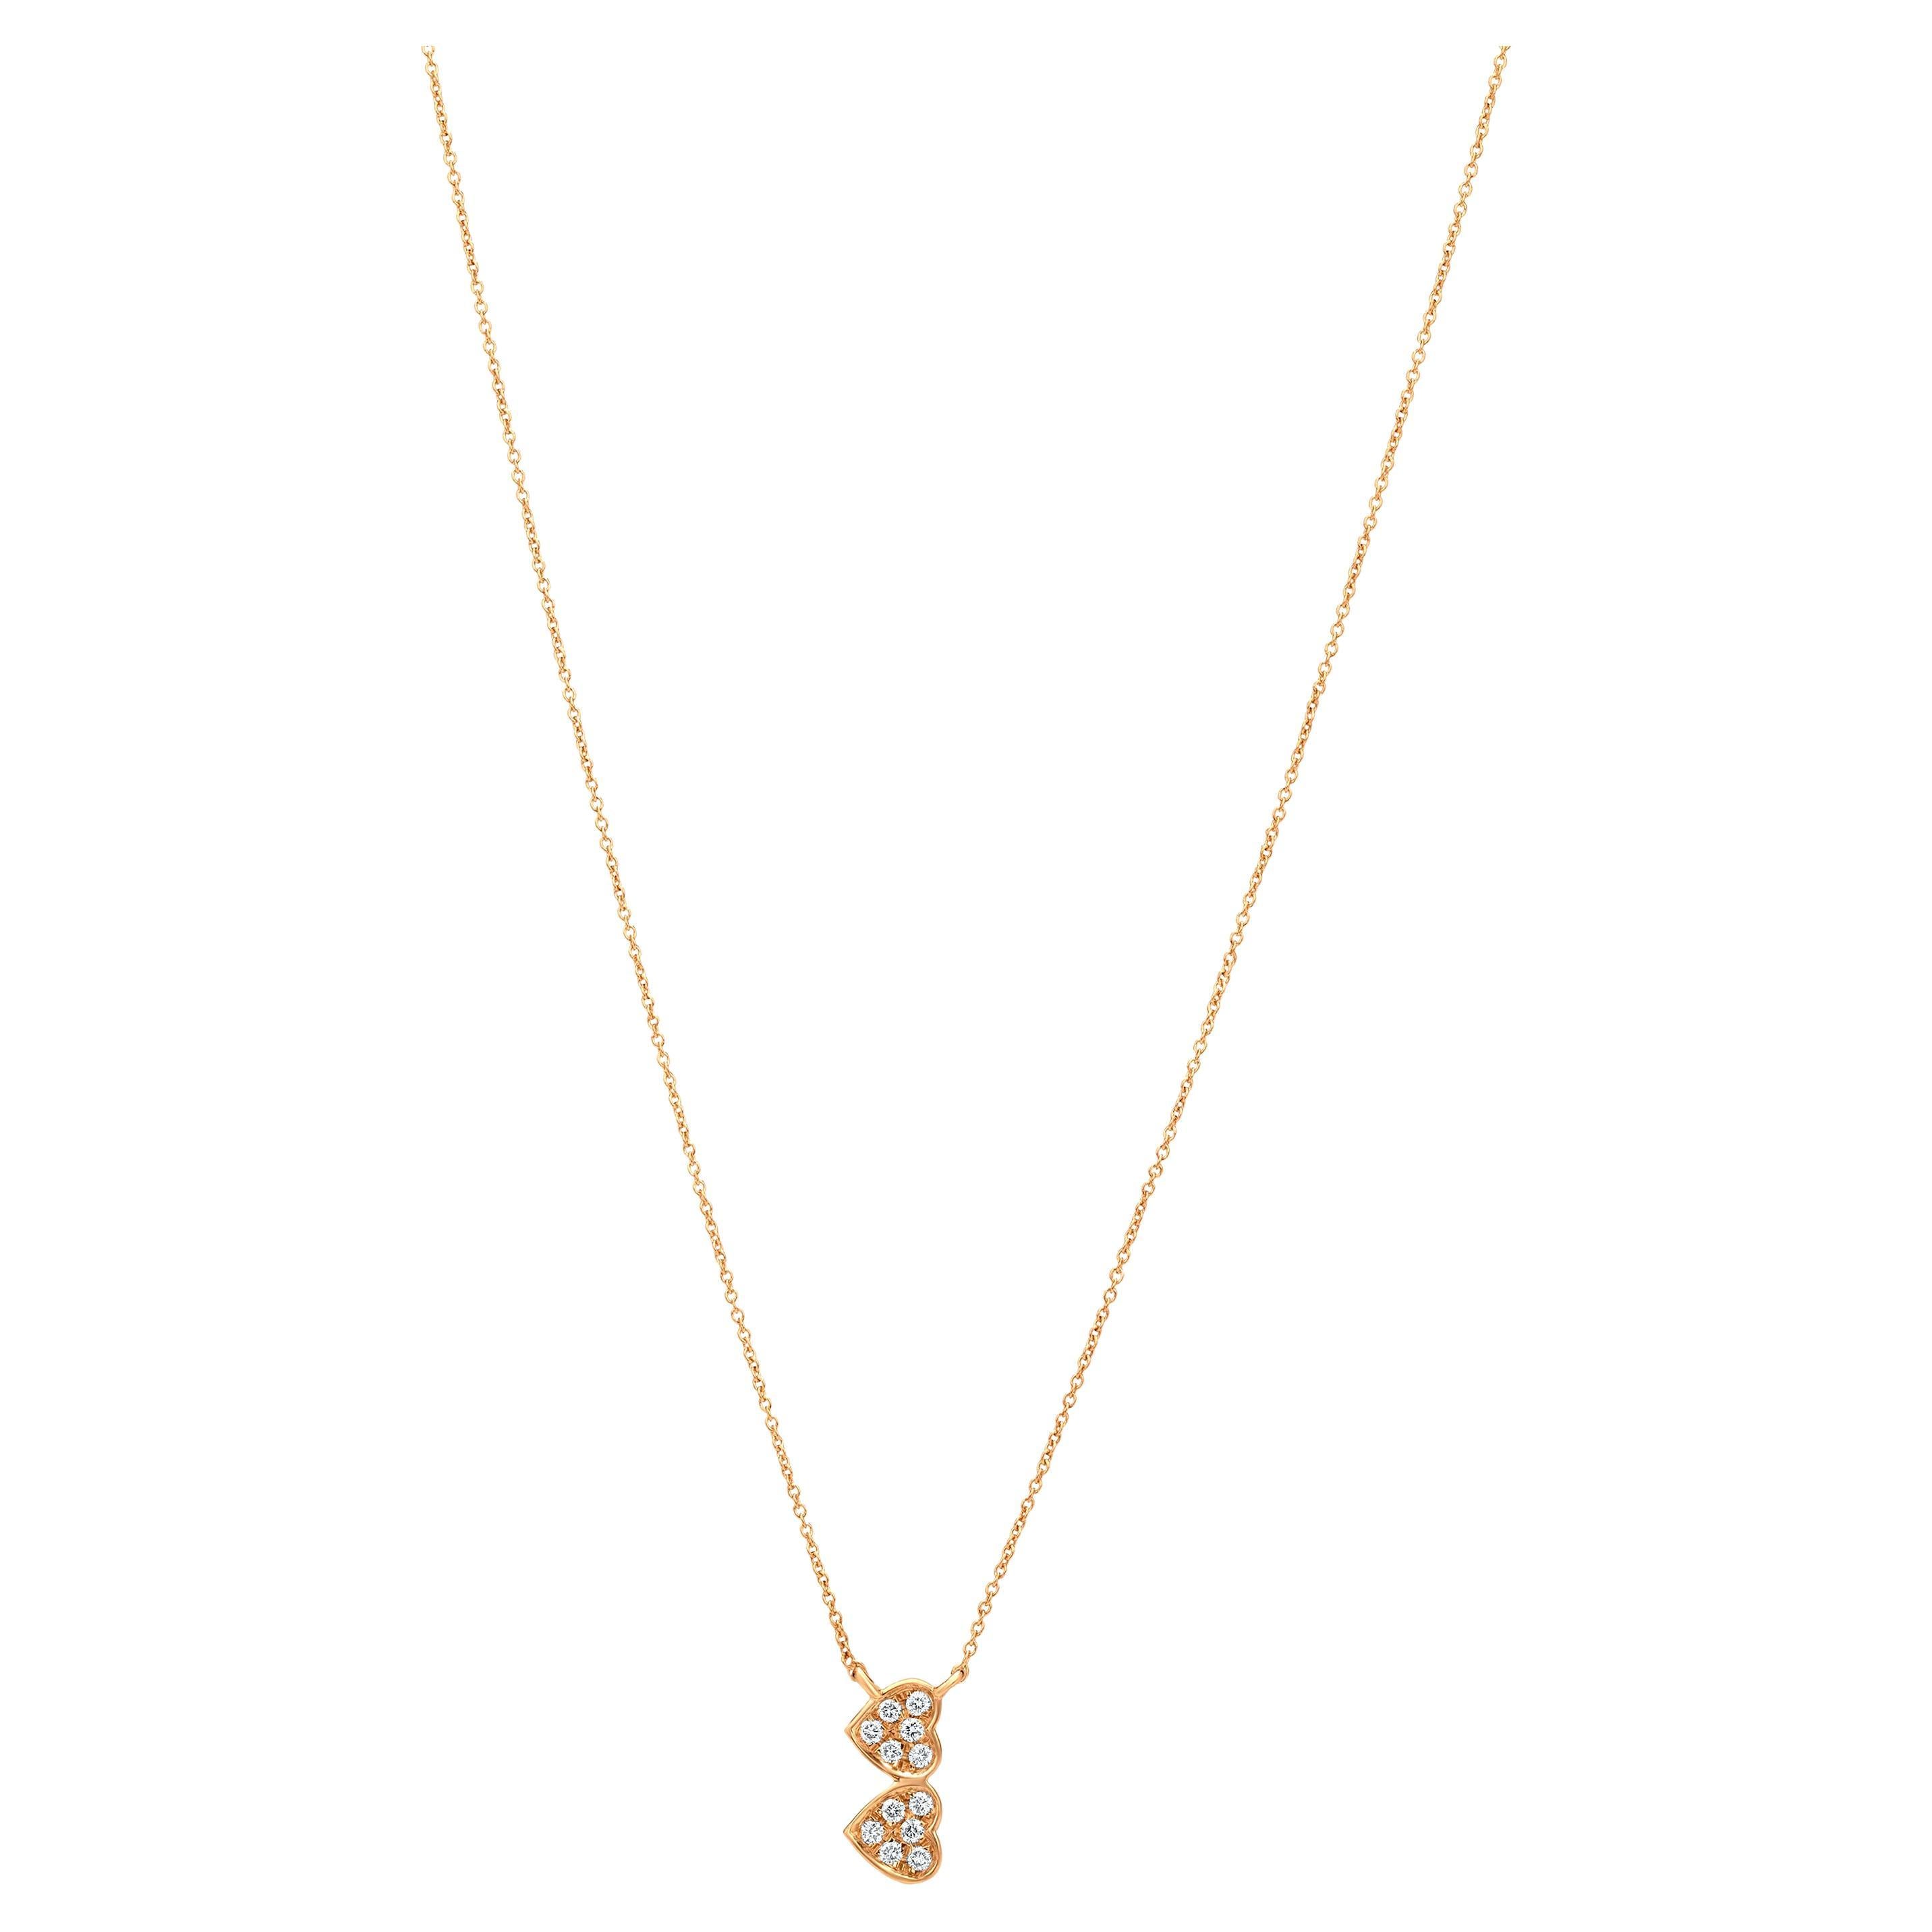 Luxle Double Heart Diamond Pendant Necklace in 18k Yellow Gold